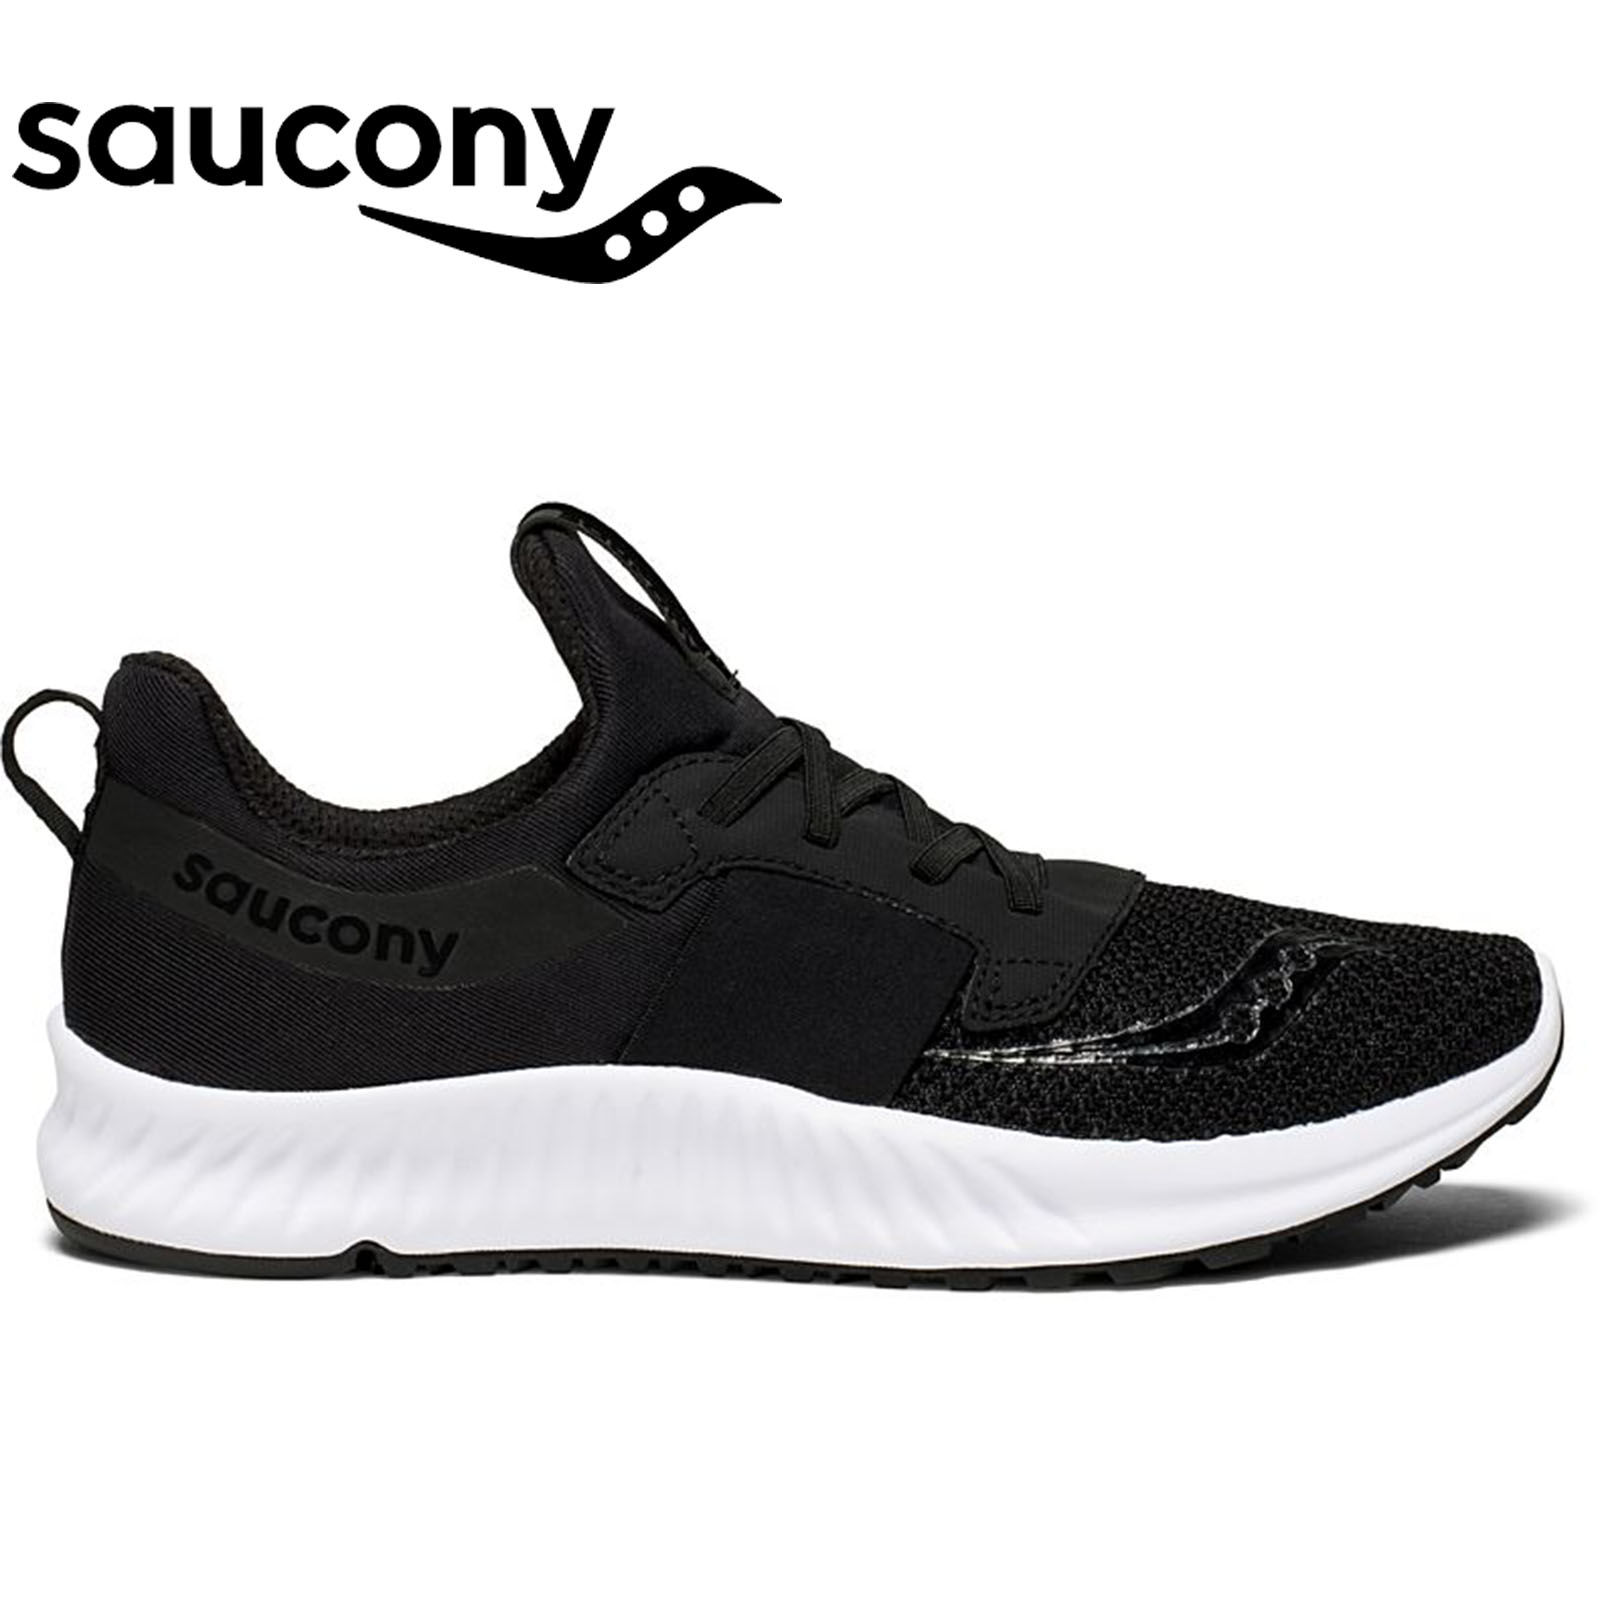 saucony memory foam shoes